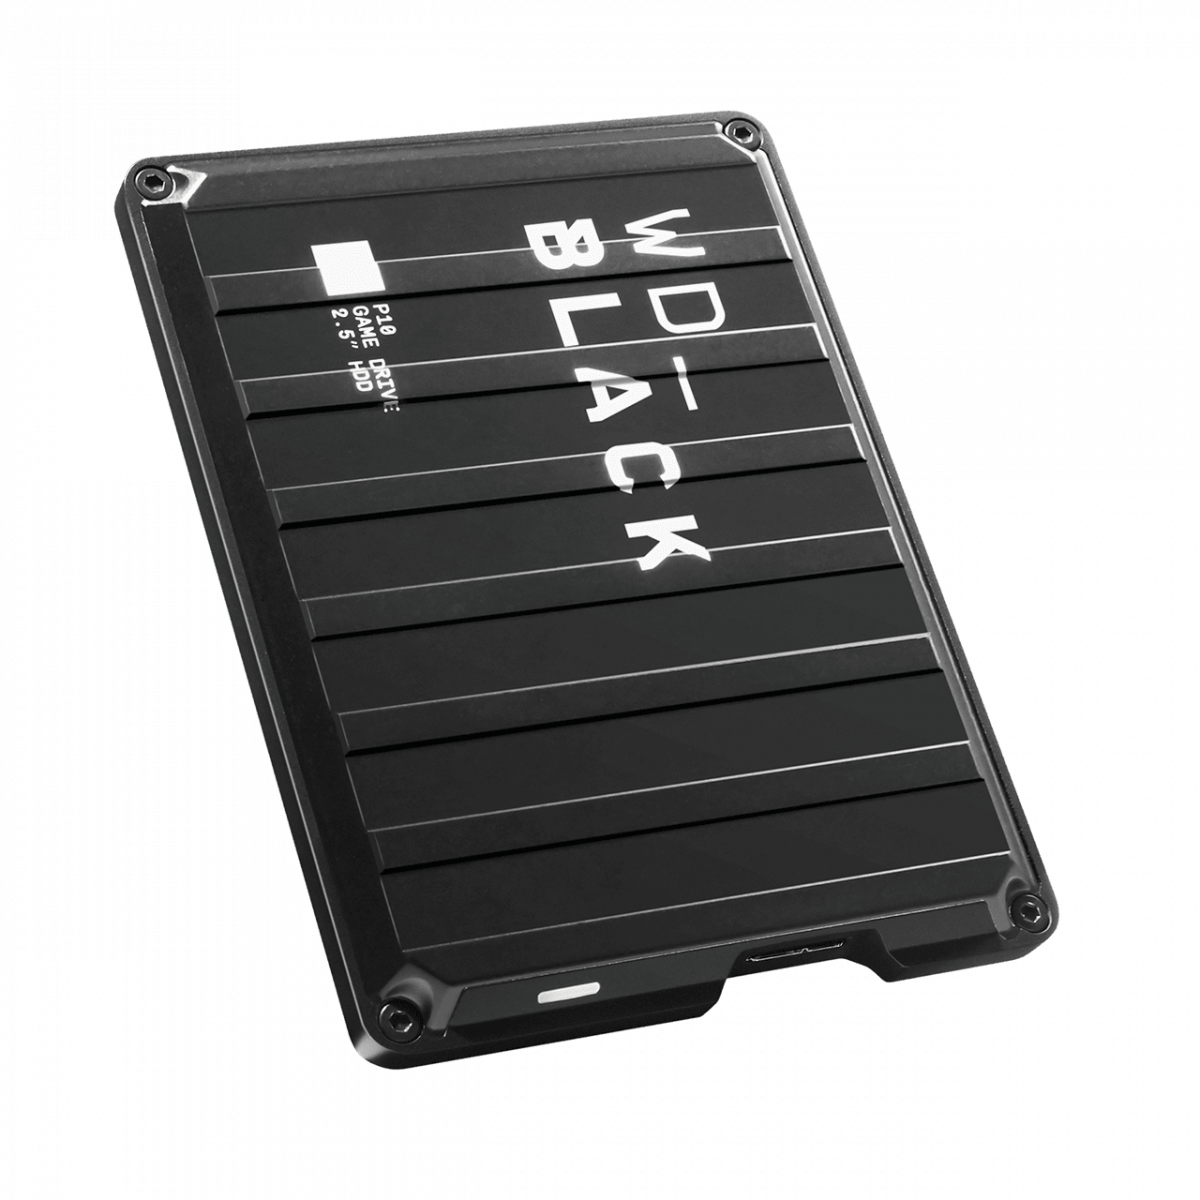 WD BLACK P10 4TB USB 3.0, črn